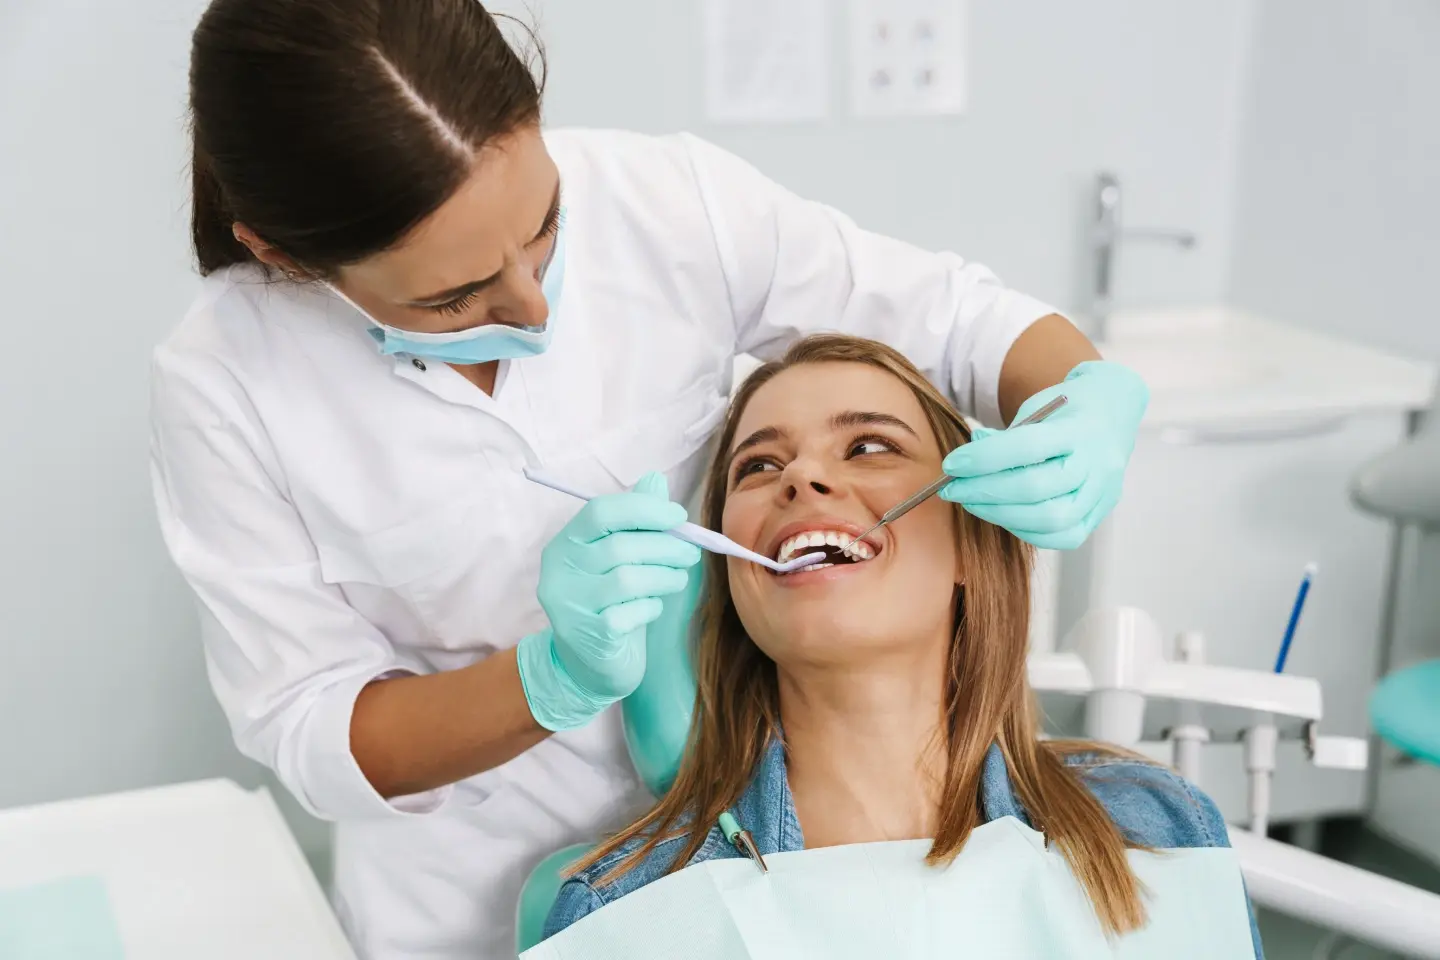 Patient Information | Gauri Savant, DDS - Dentist New York, NY 10016 | (212) 221-1481